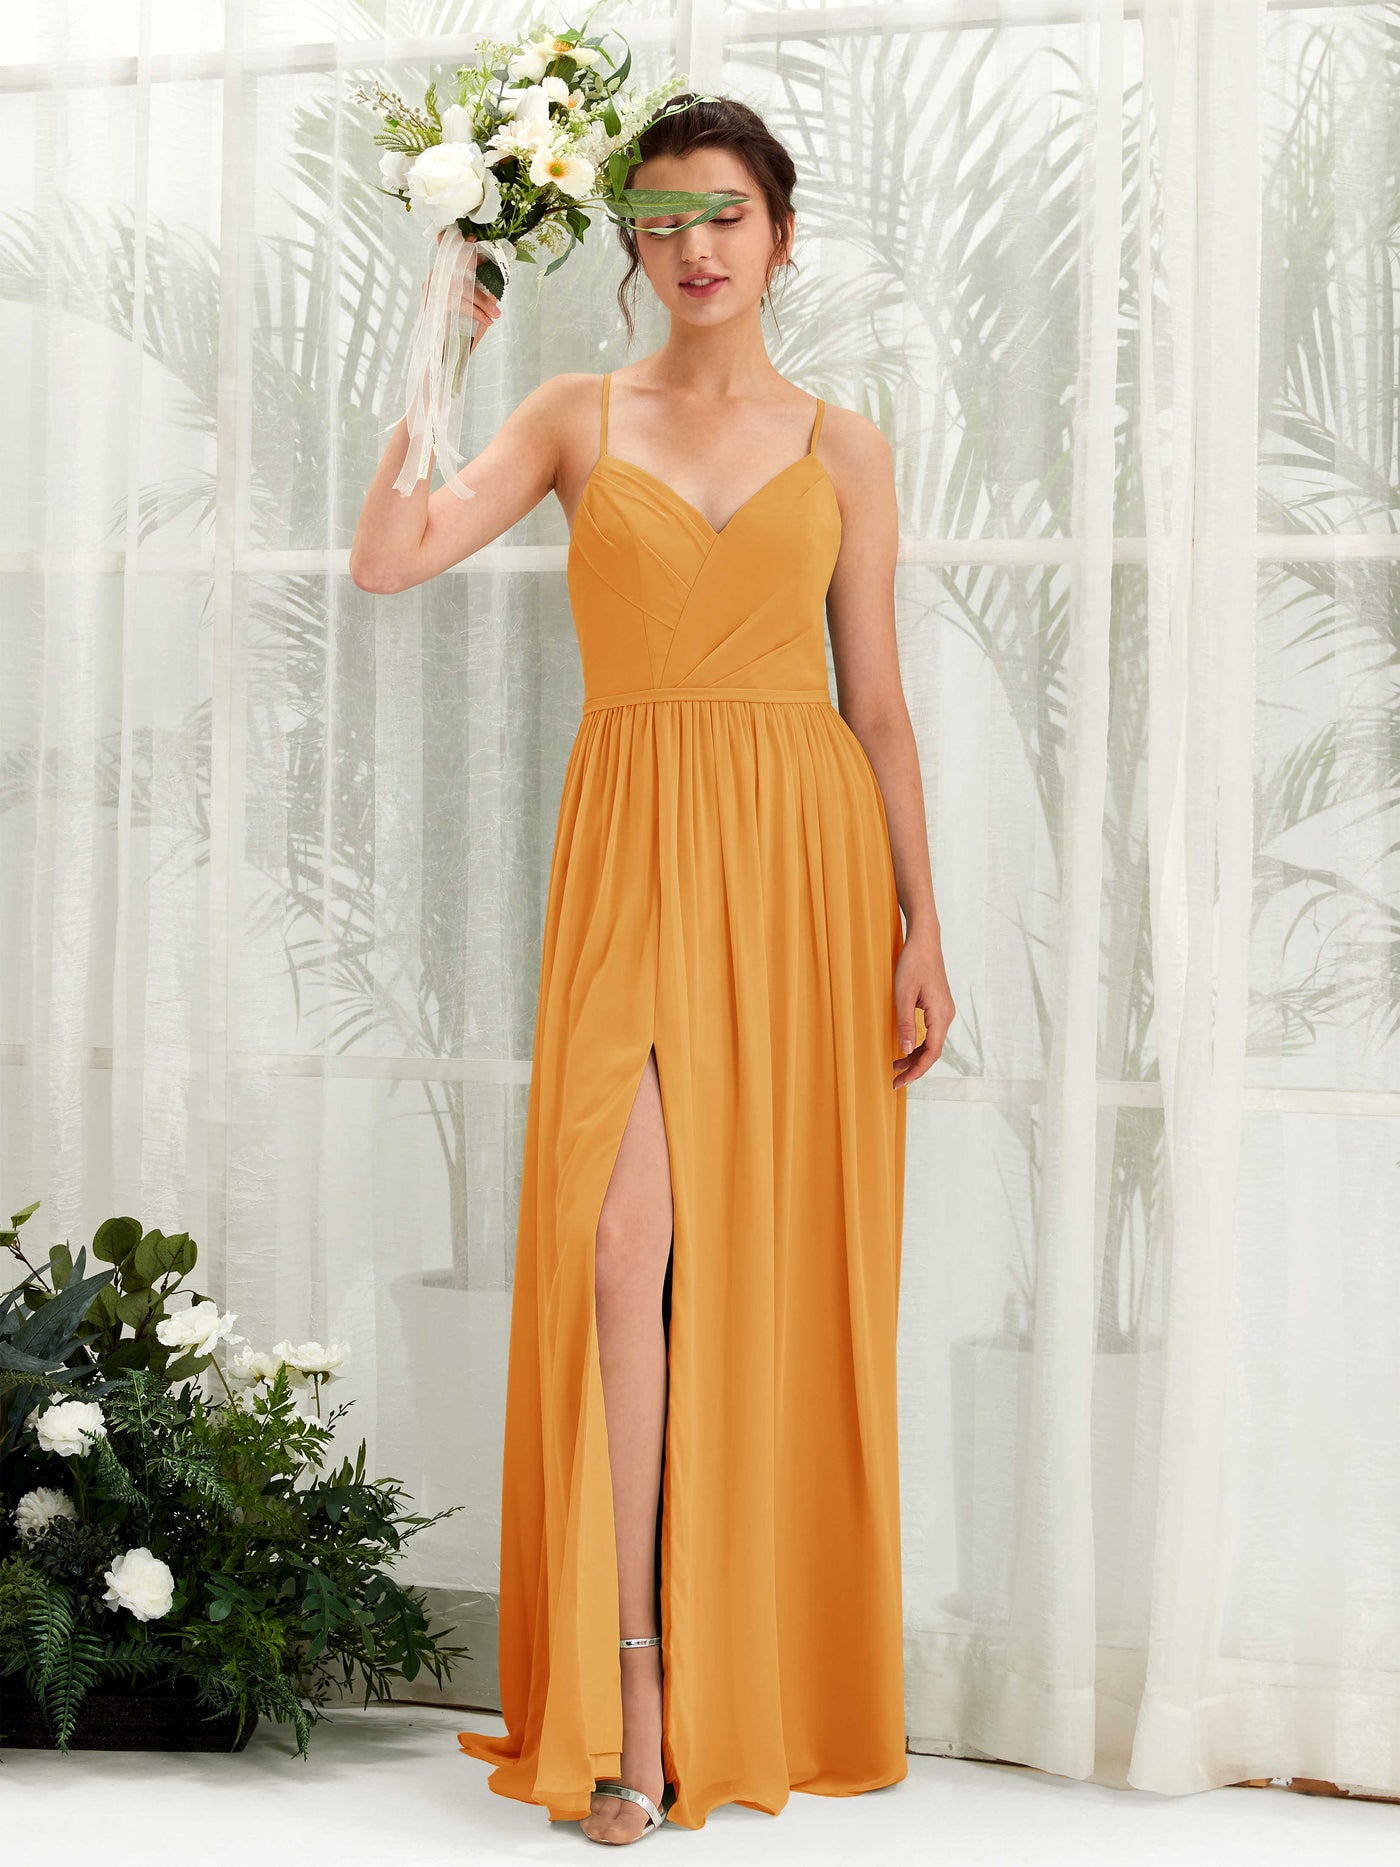 Mango Bridesmaid Dresses Bridesmaid Dress Maternity Chiffon Spaghetti-straps Full Length Sleeveless Wedding Party Dress (81221402)#color_mango